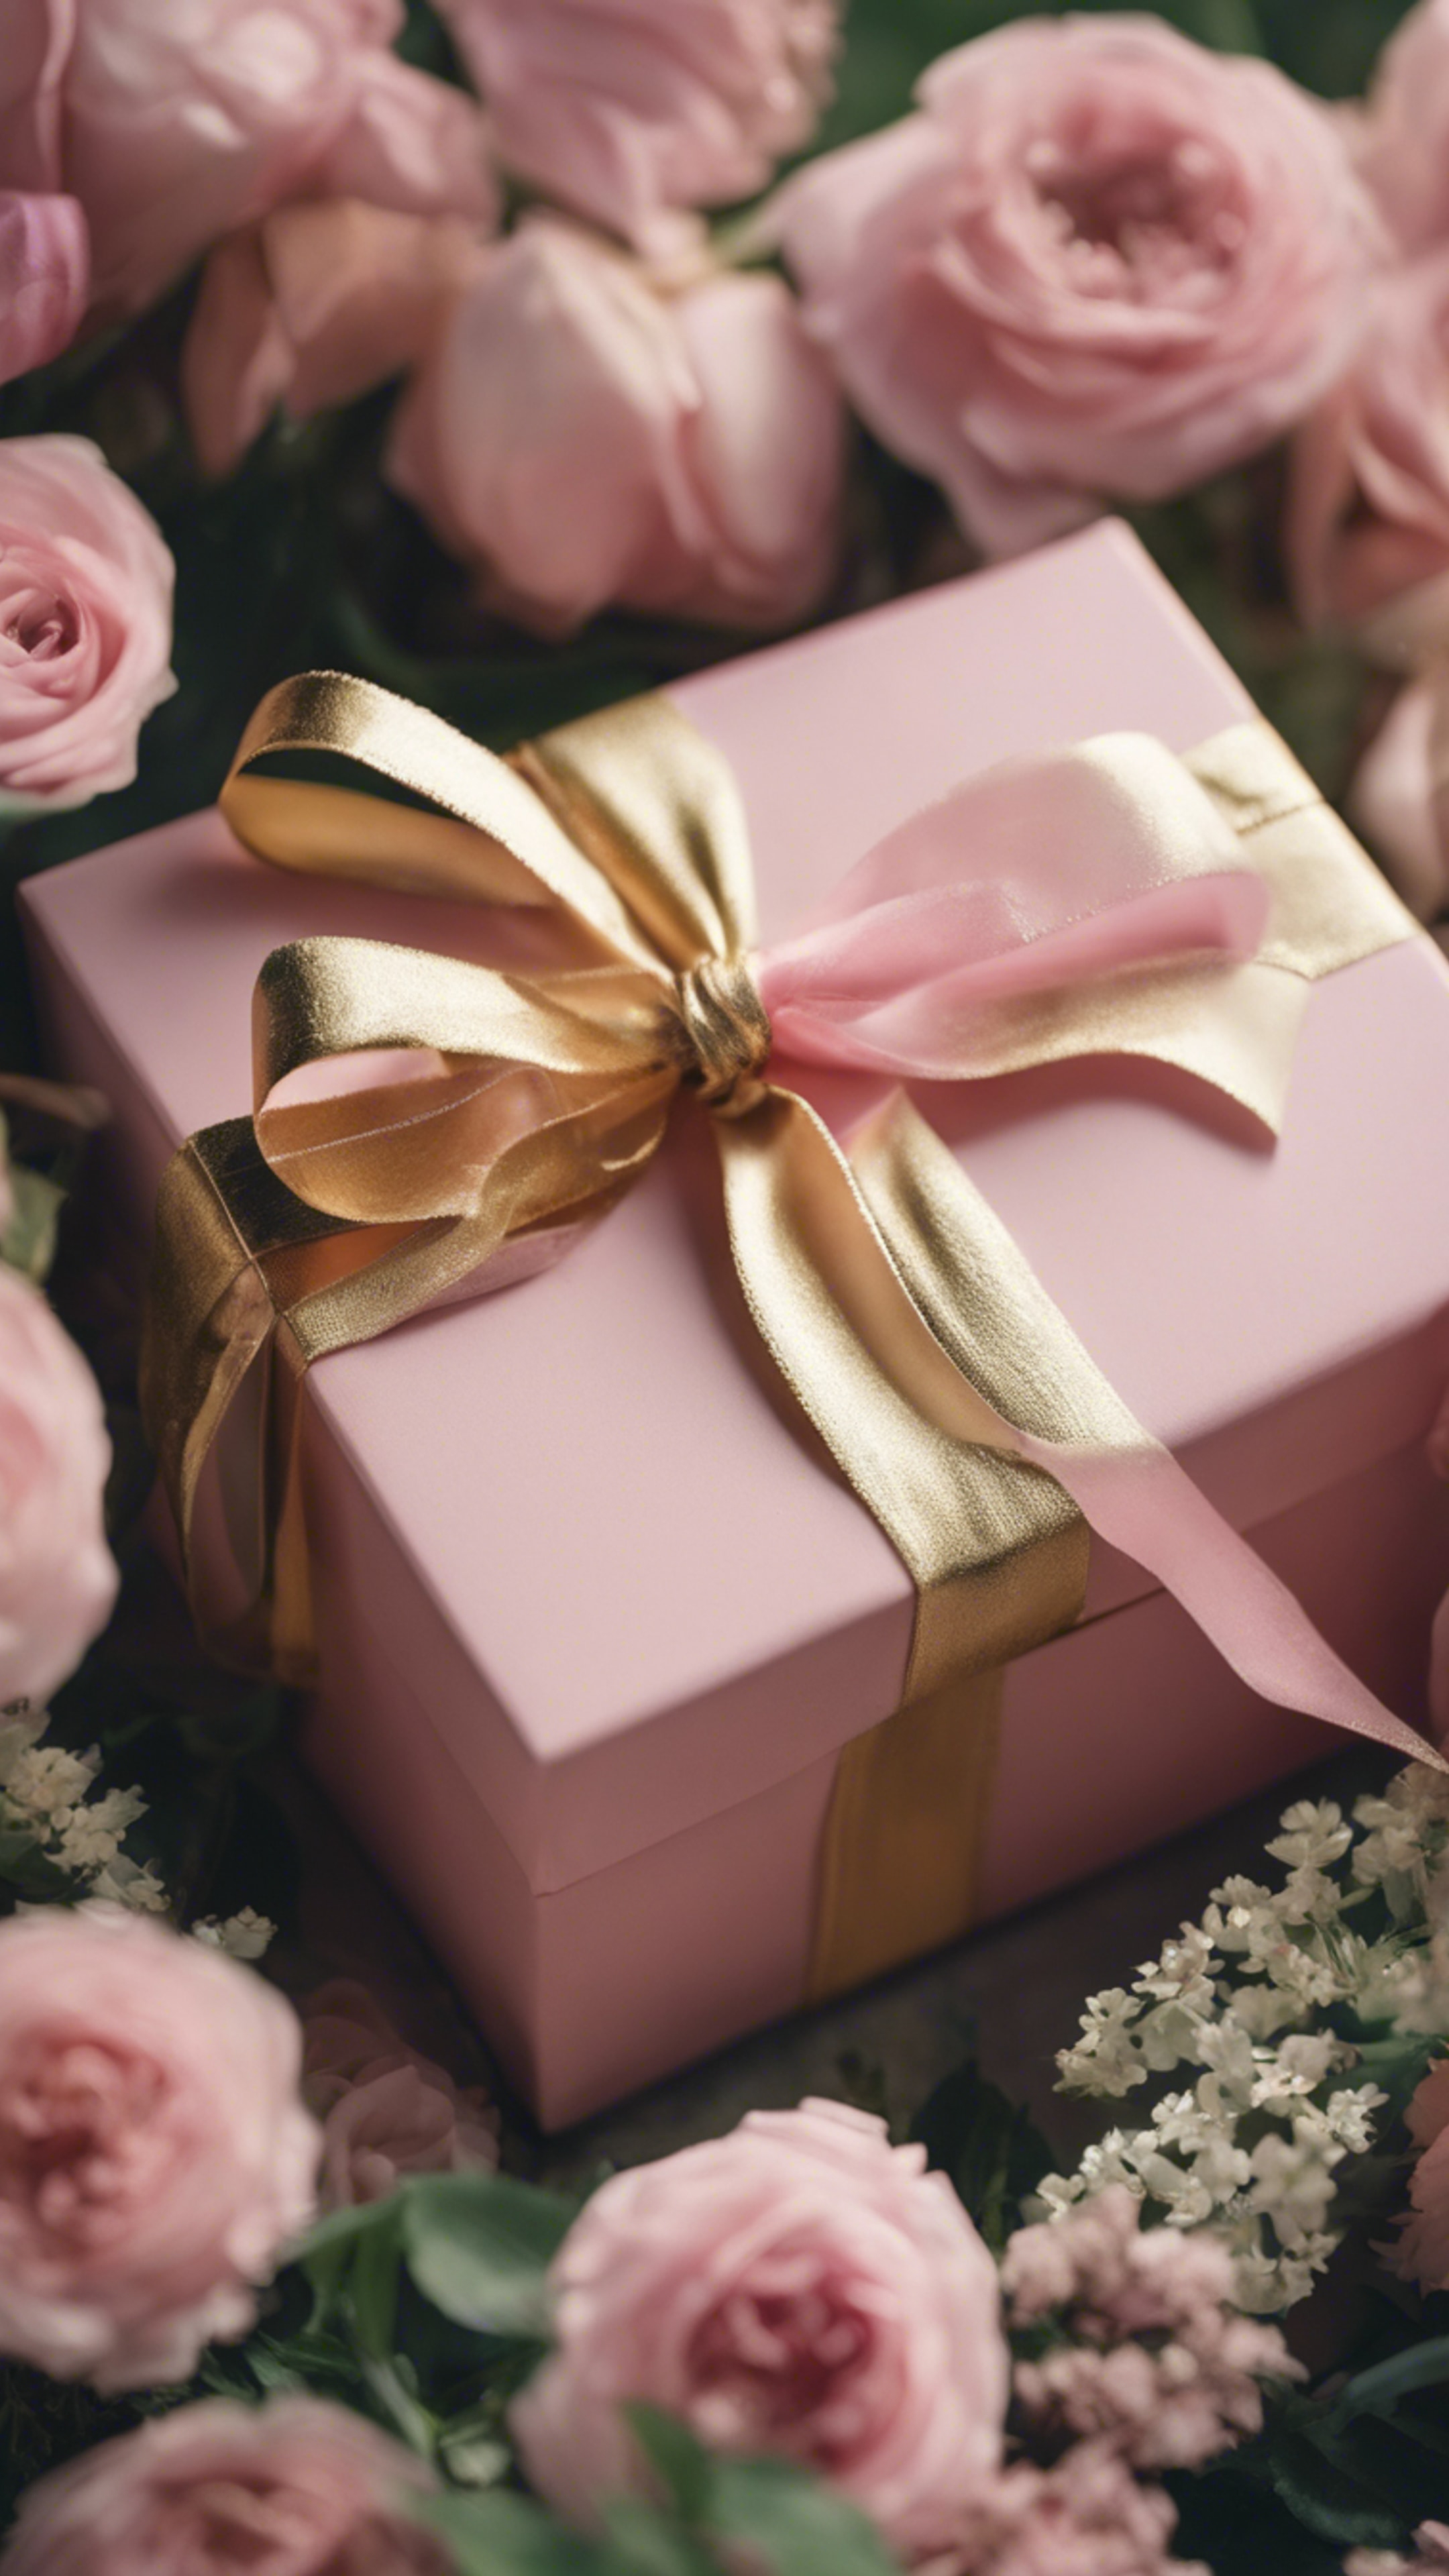 A gold-ribboned pink gift box nestled amongst flowers and greenery. duvar kağıdı[057f26c1d4b14d2a96a8]